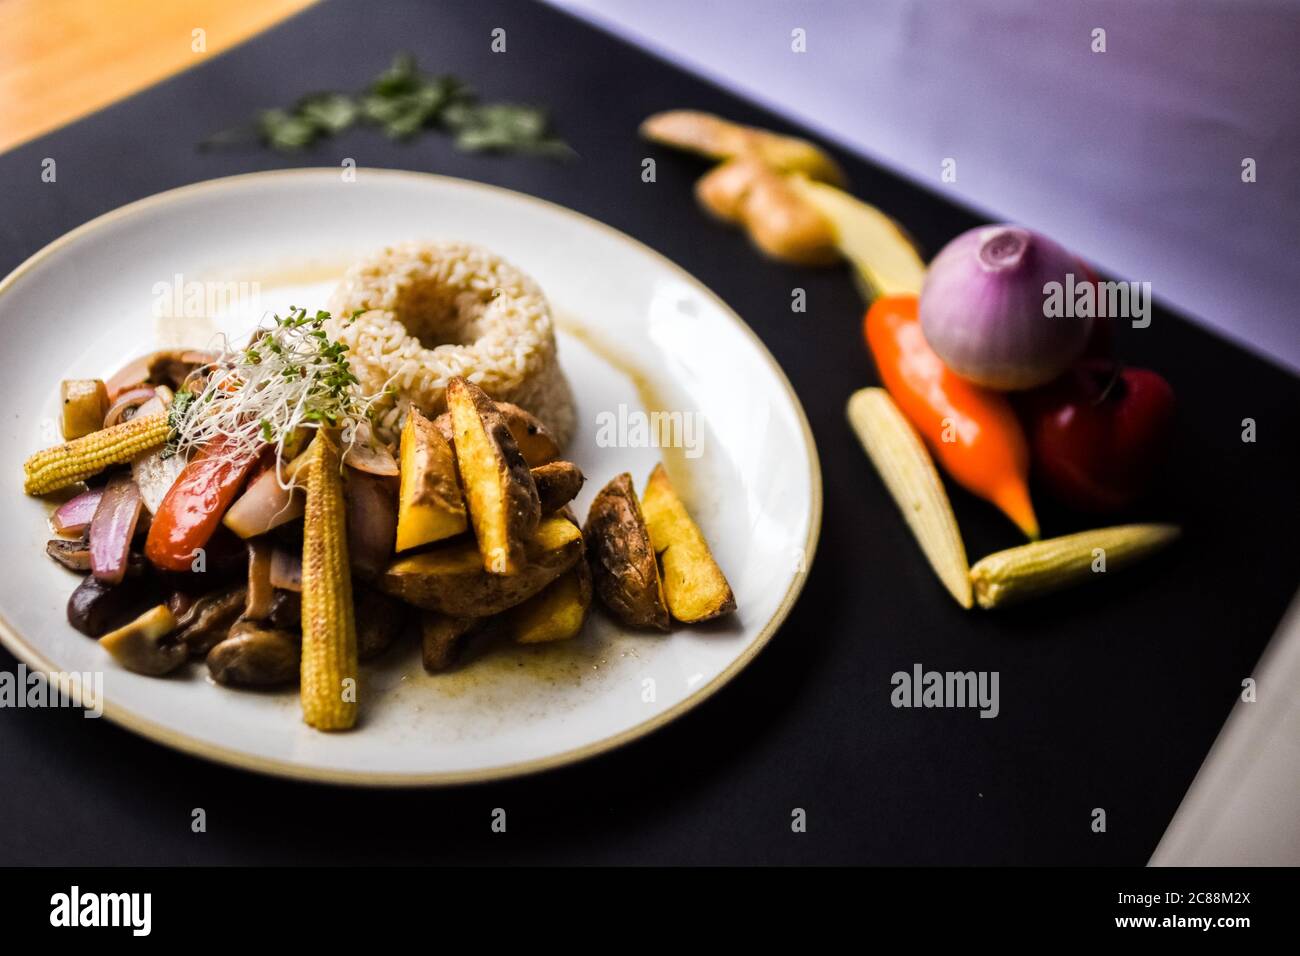 Tasty dish with roasted potatoes, mushrooms baby corns and rice Stock Photo